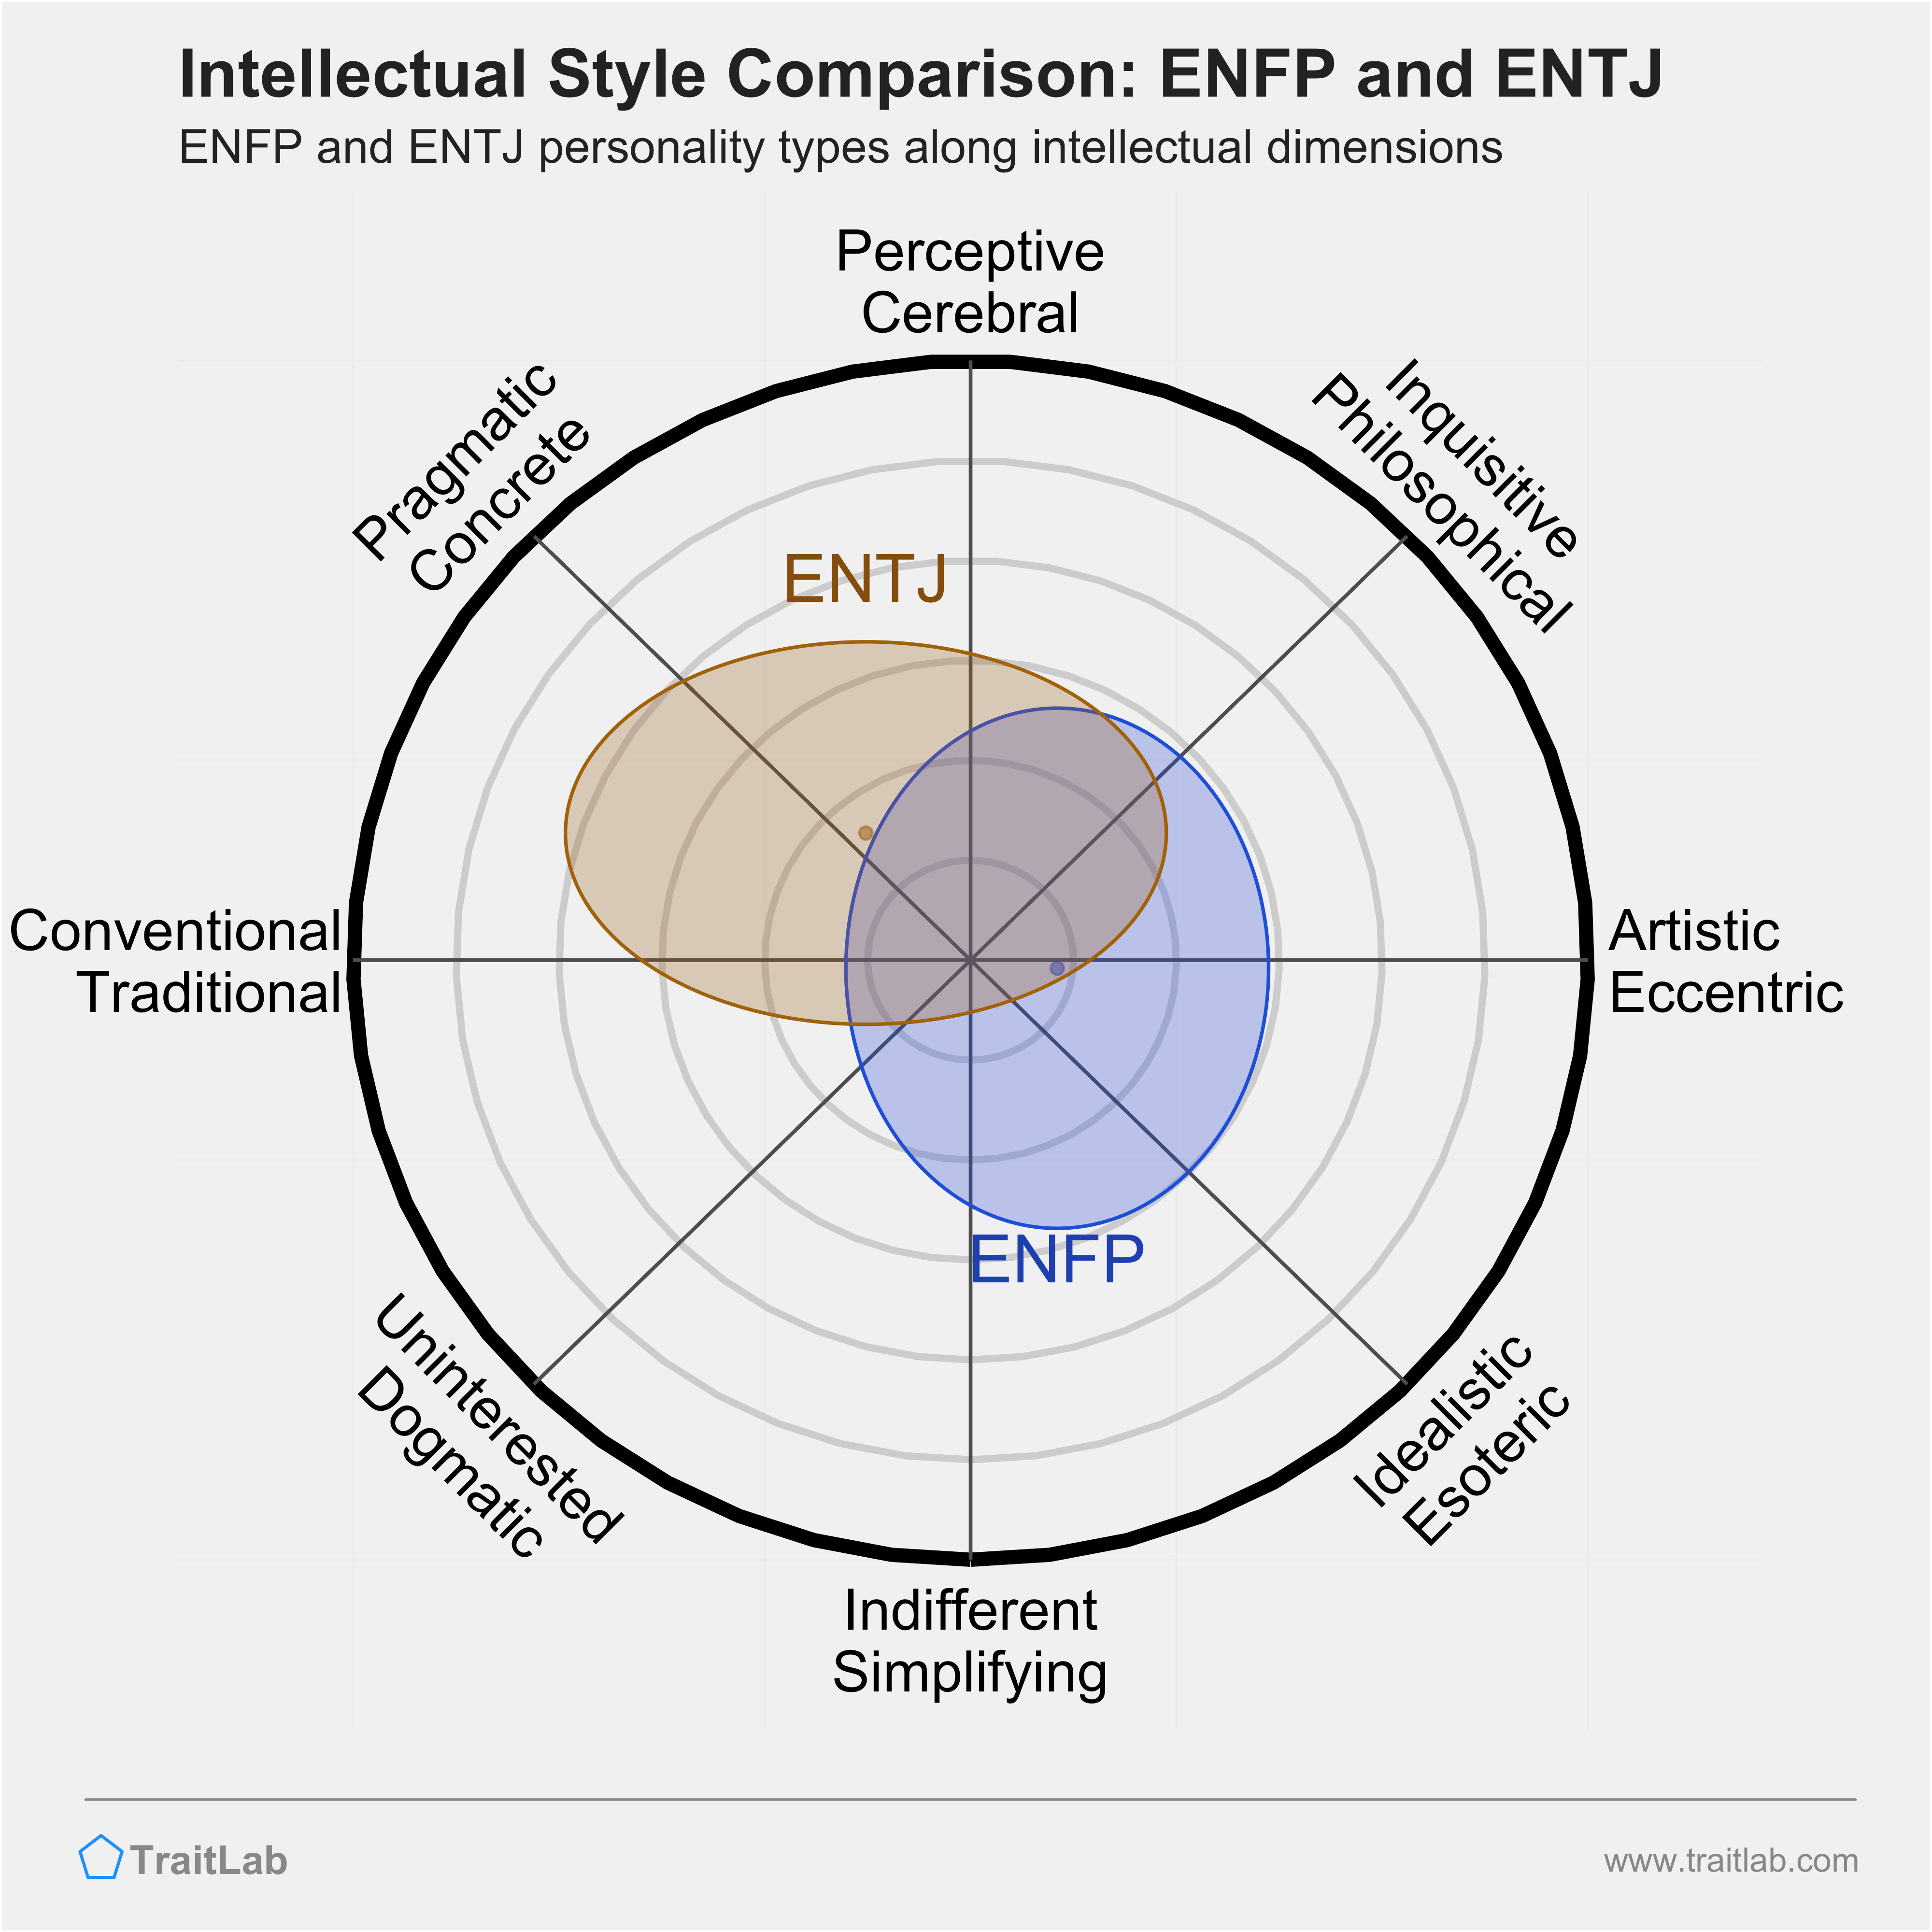 ENFP and ENTJ comparison across intellectual dimensions